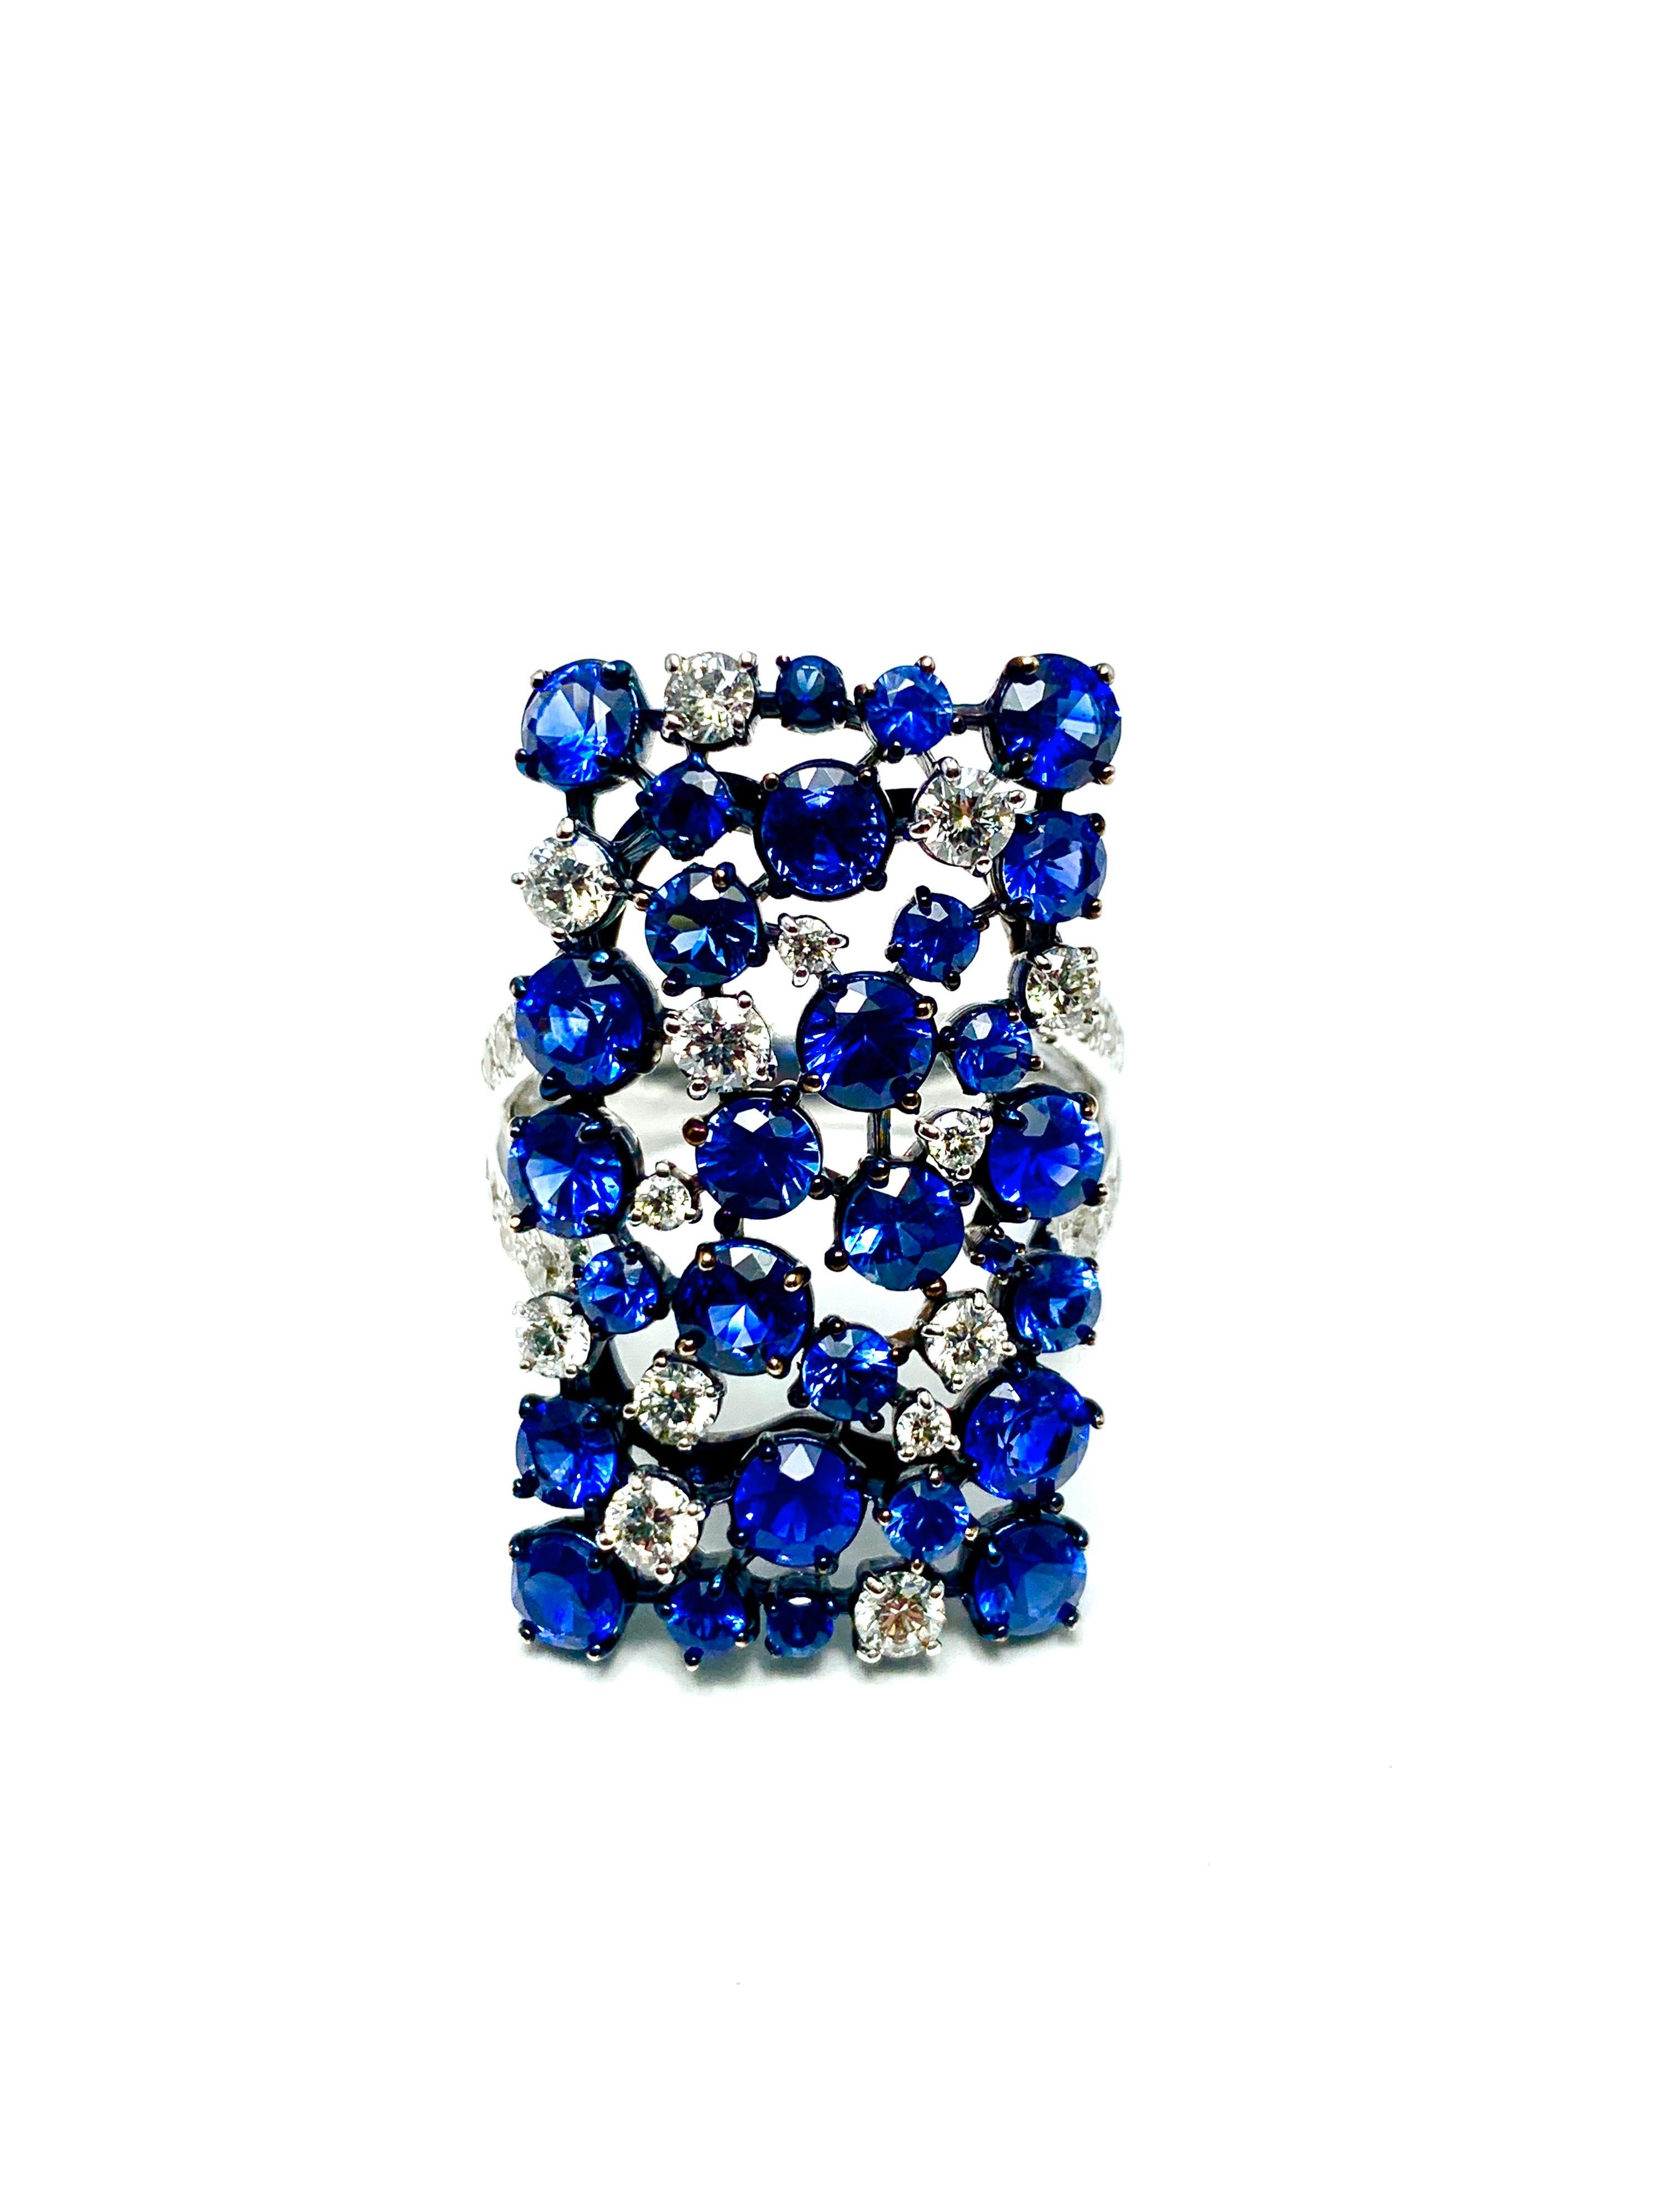 Mariani Manhattan Sapphire and Diamond Ring in 18 Karat Blue and White Gold 2